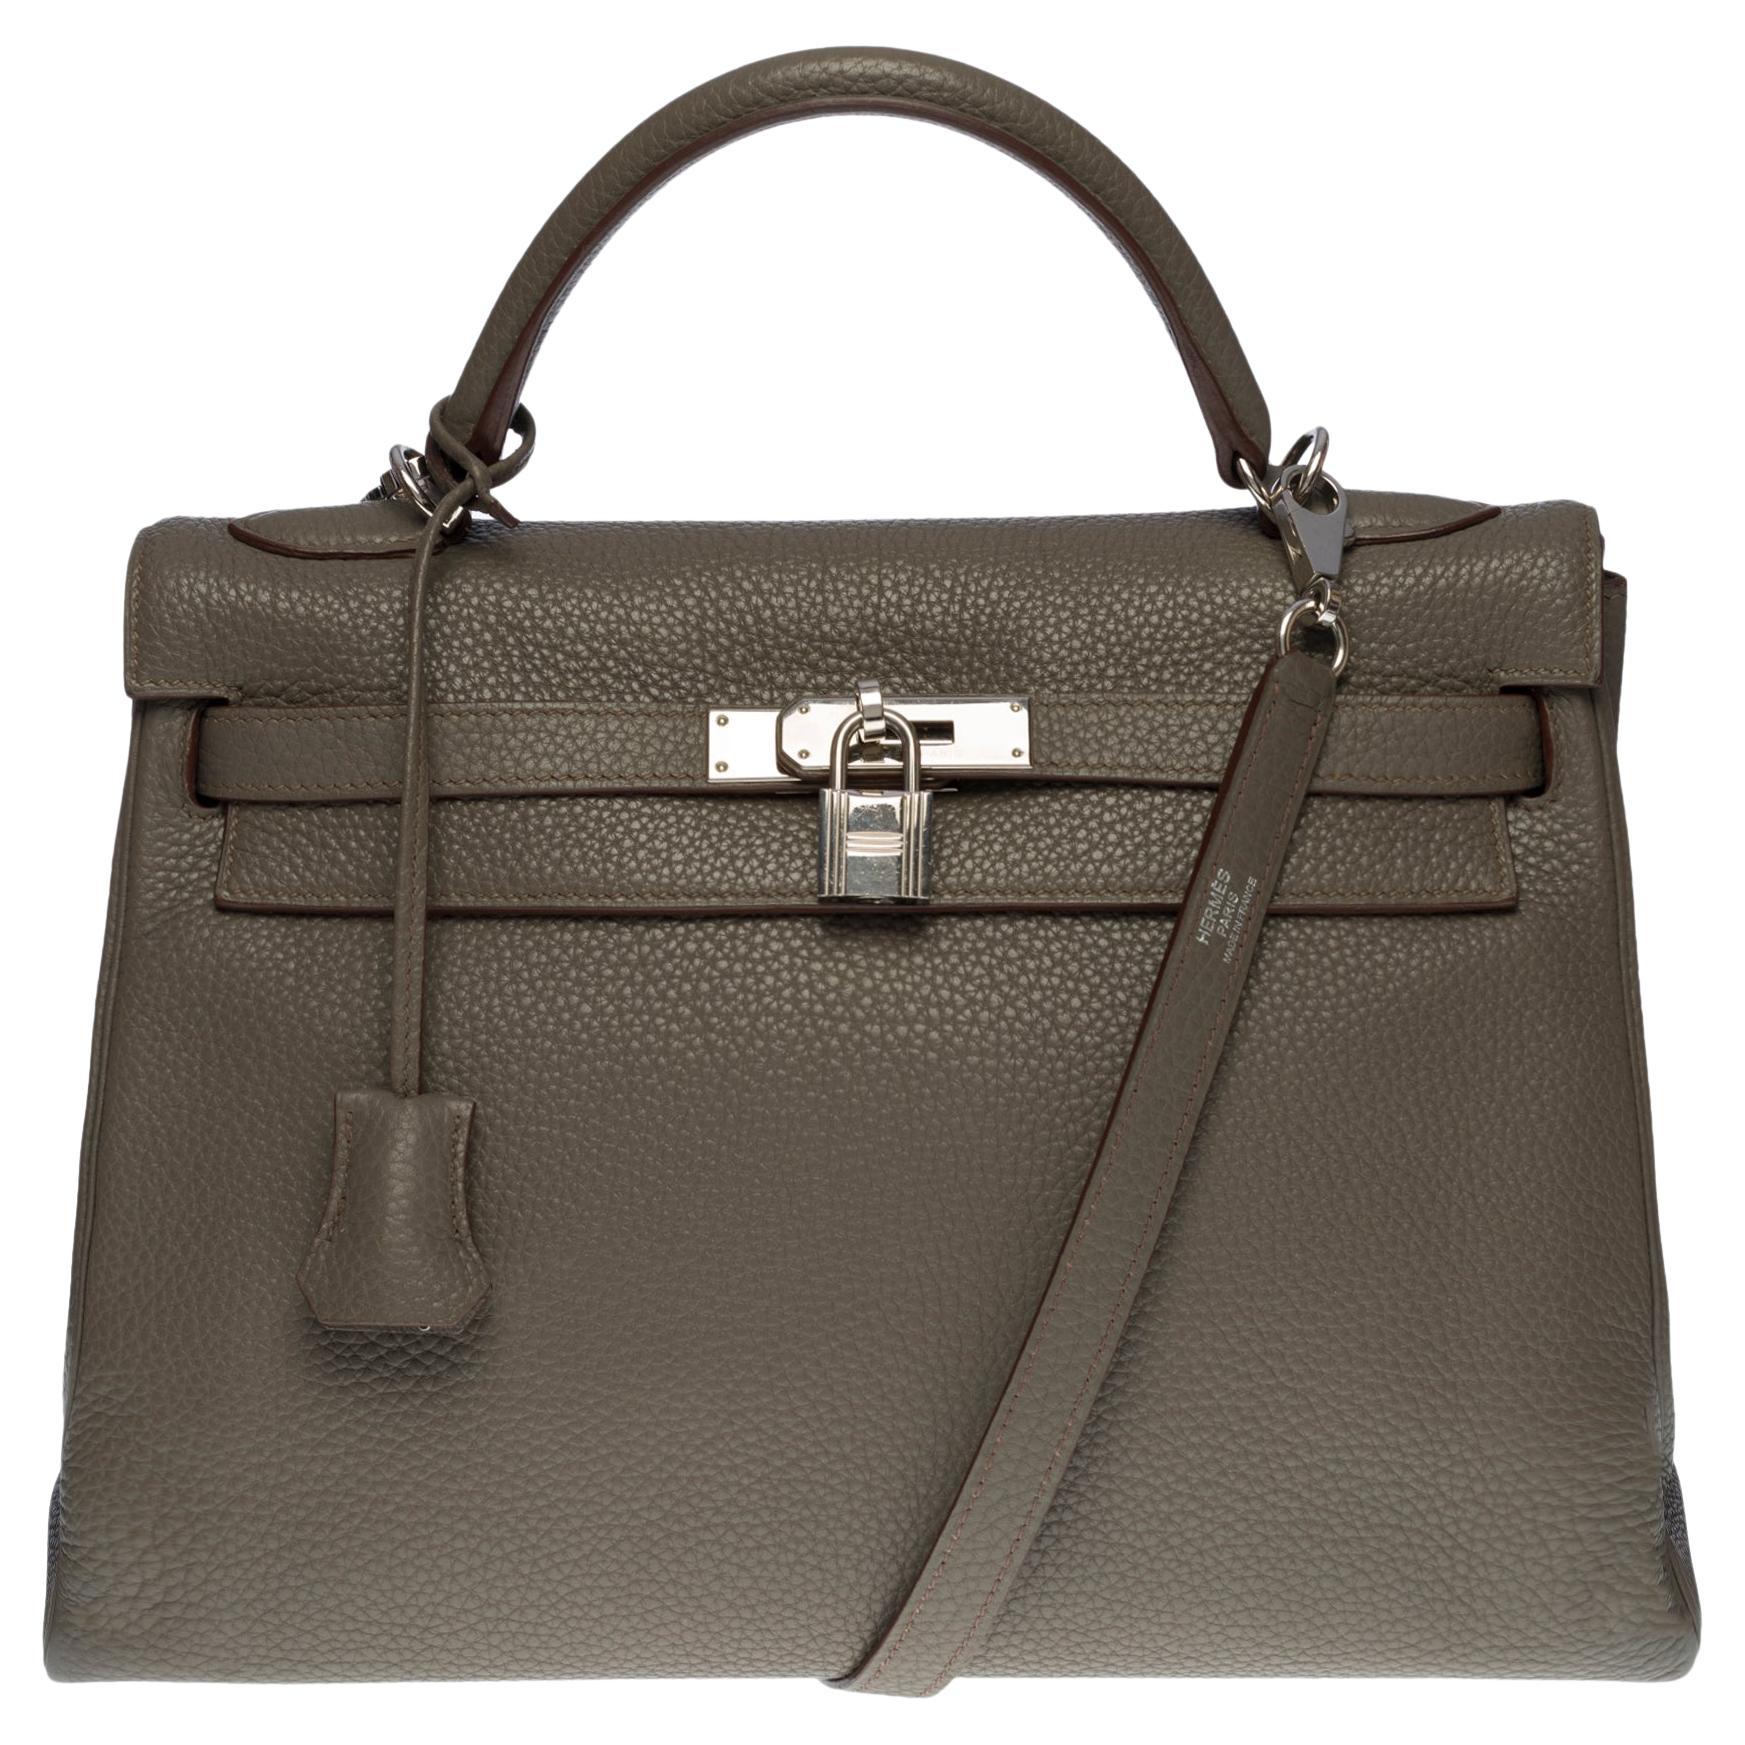 Exquisite Hermès Kelly 32cm retourne handbag strap in Etain Togo leather, SHW